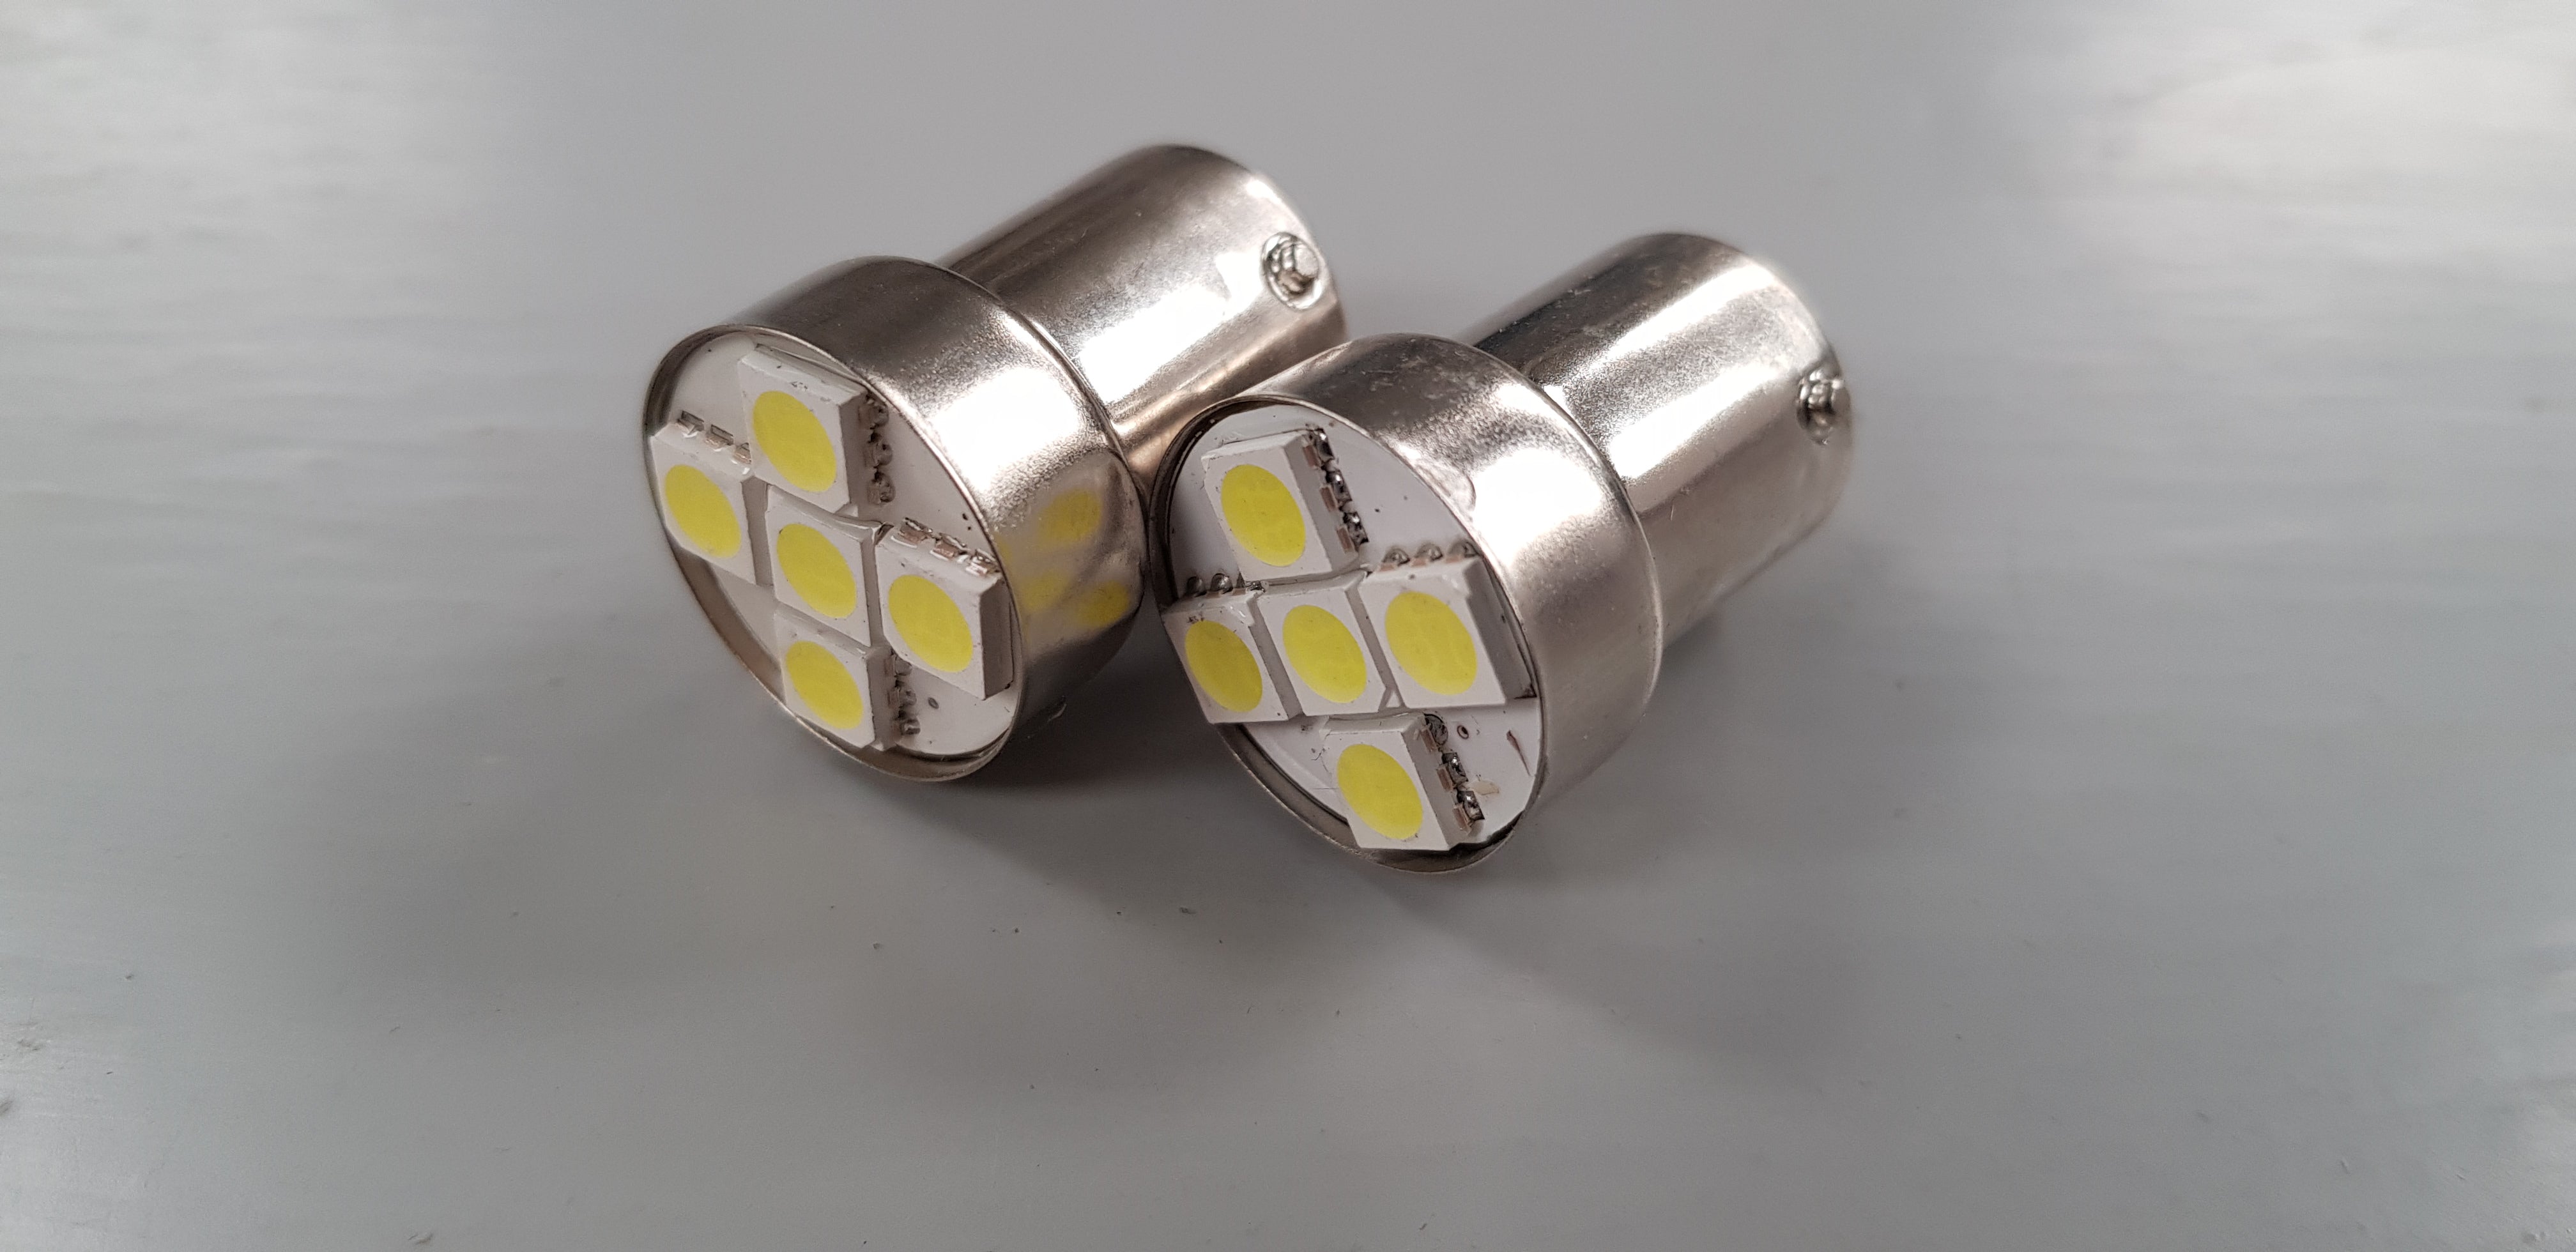 LED Single Contact Tail Light Bulbs Replaces 149 Flasher / Indicator Pack of 2 - 24v LED Bulbs - LED Bulbs - spo-cs-dis